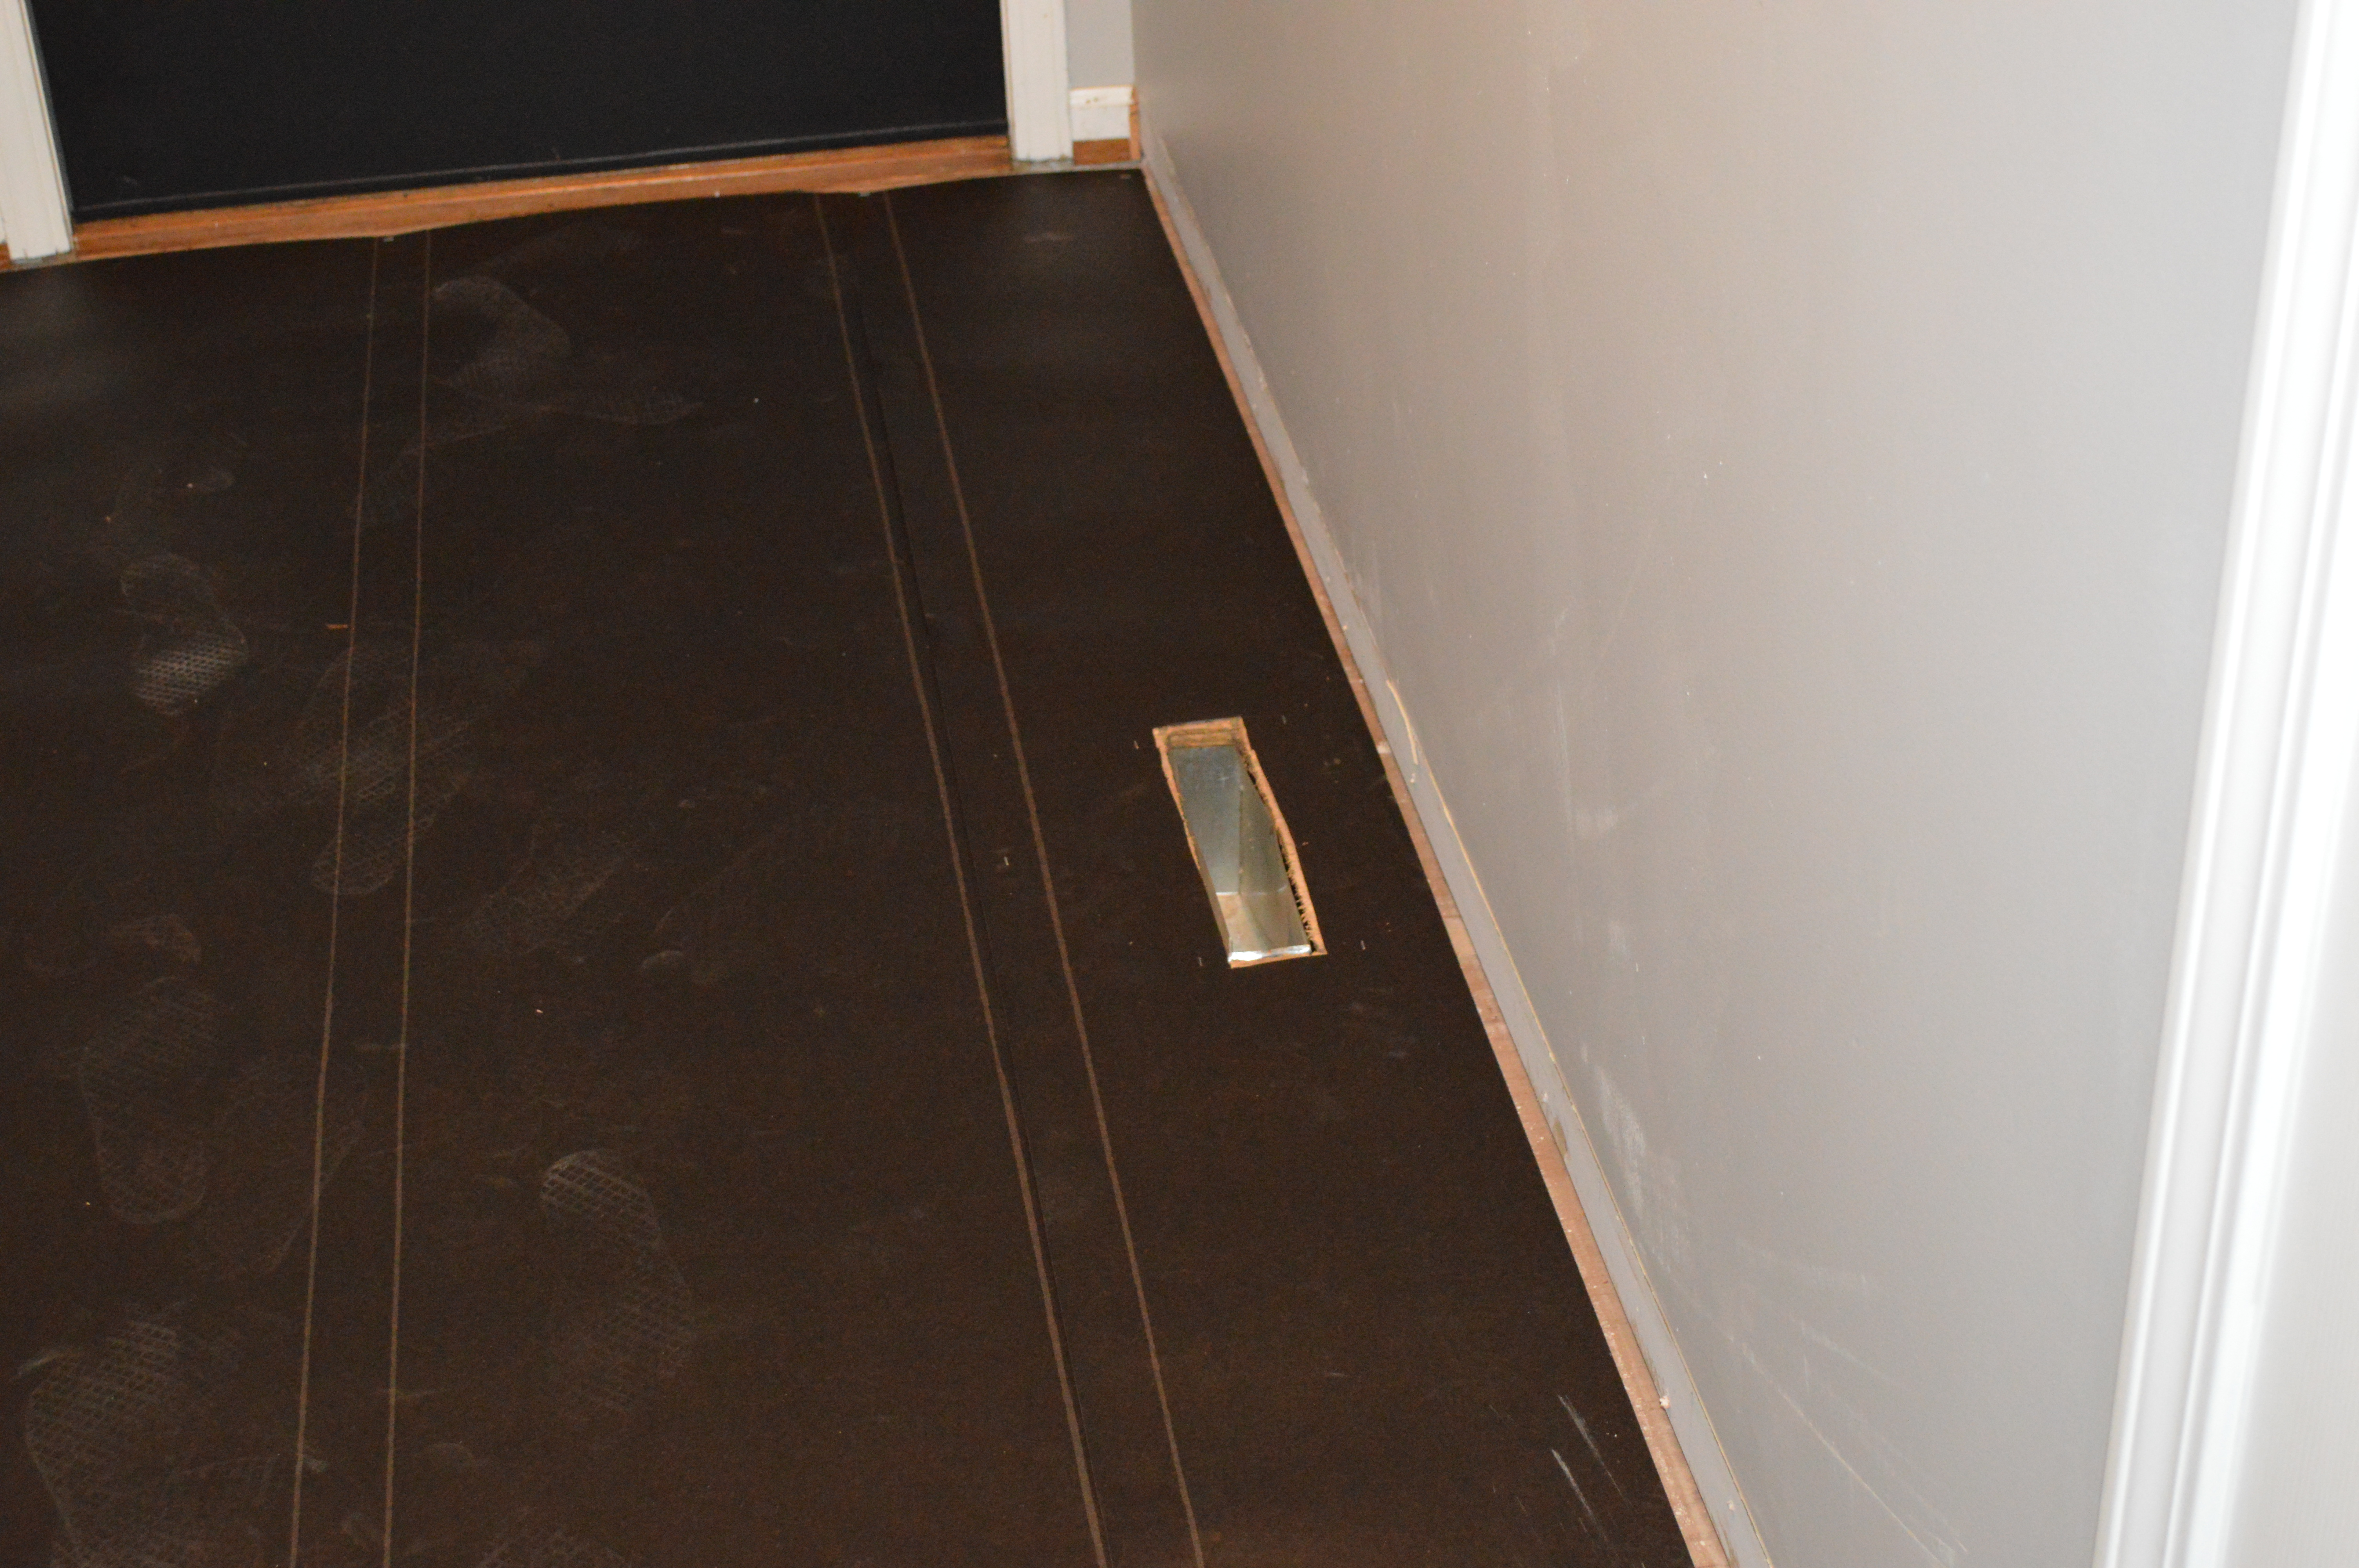 Lay Engineered Wood Flooring, Can Felt Paper Be Used Under Laminate Flooring